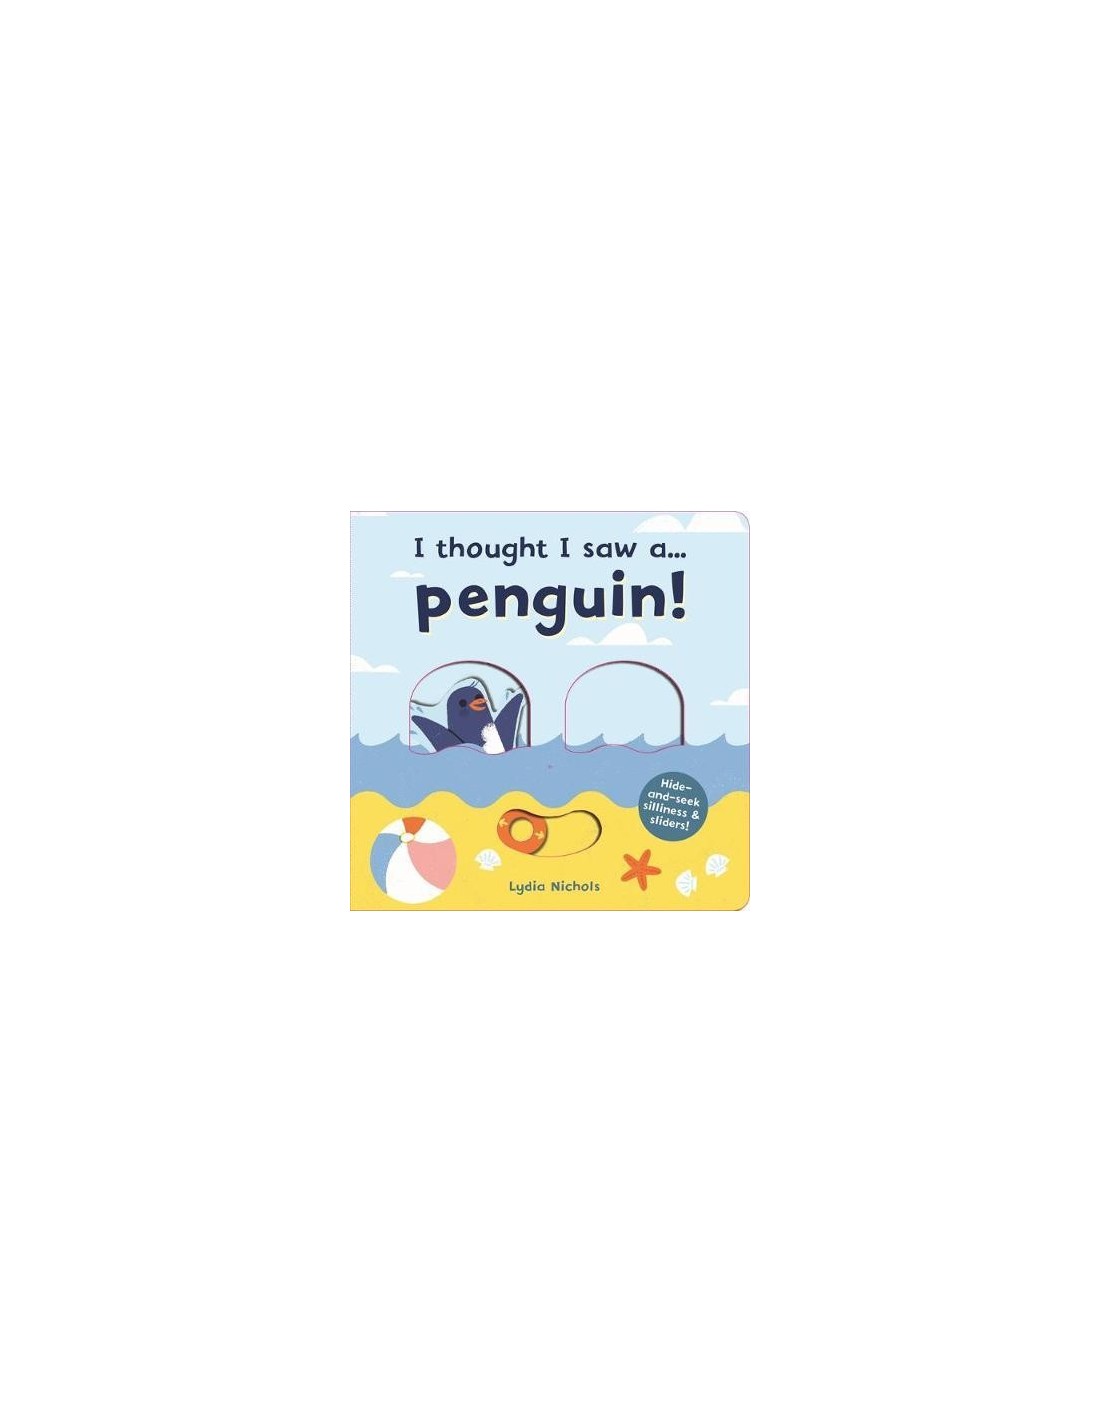 I thought I saw a... Penguin!